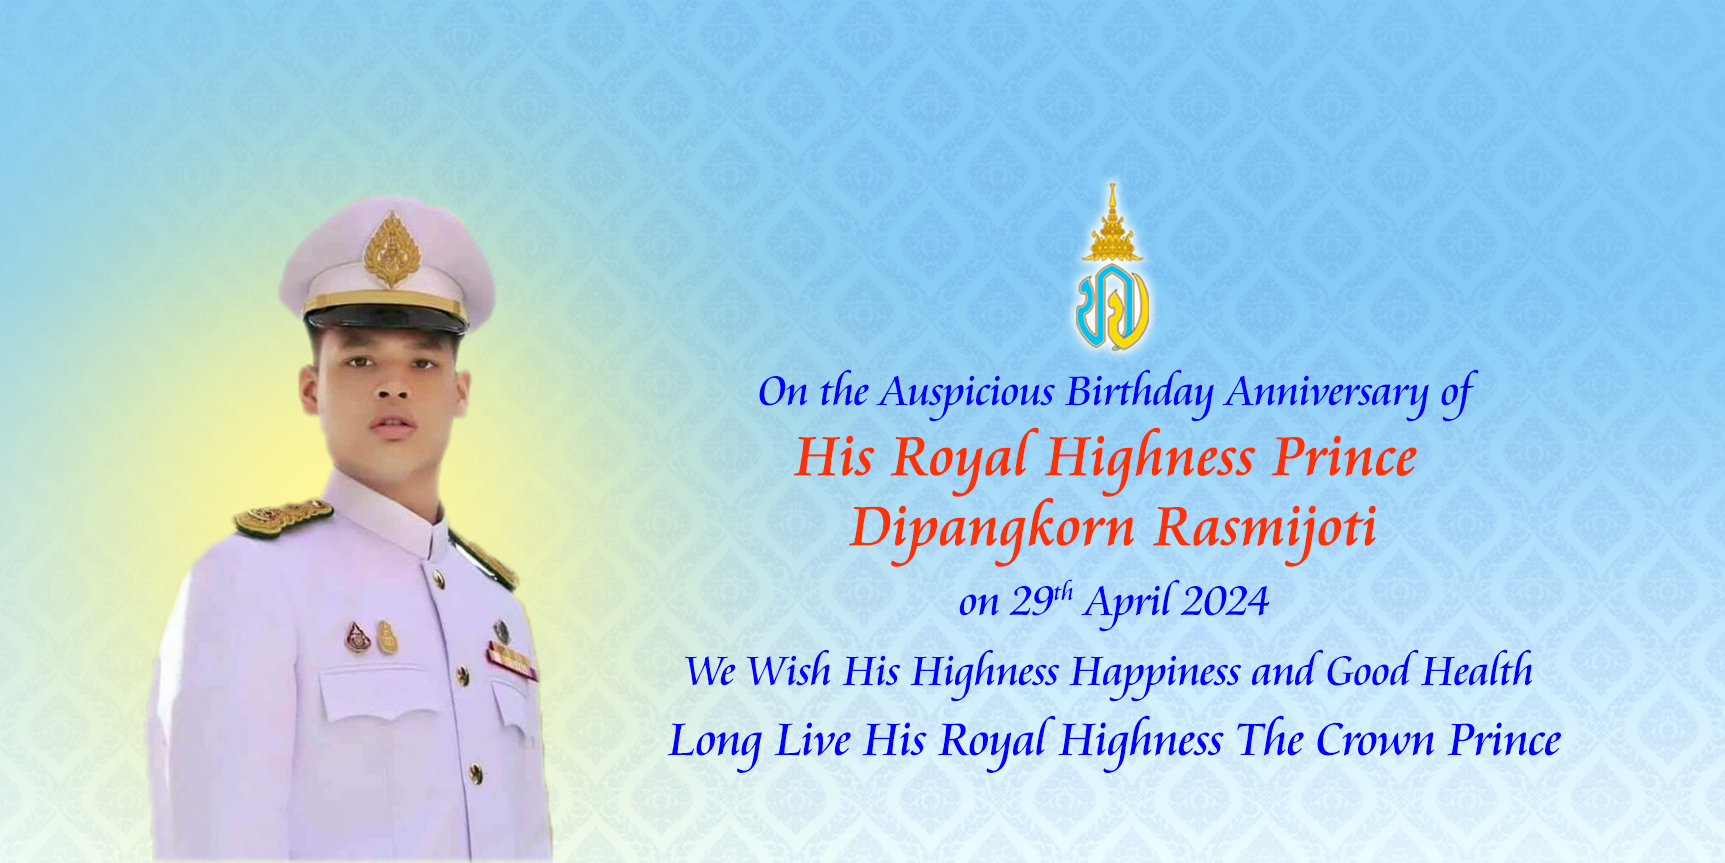 His Royal Highness Prince Dipangkorn Rasmijoti’ Birthday